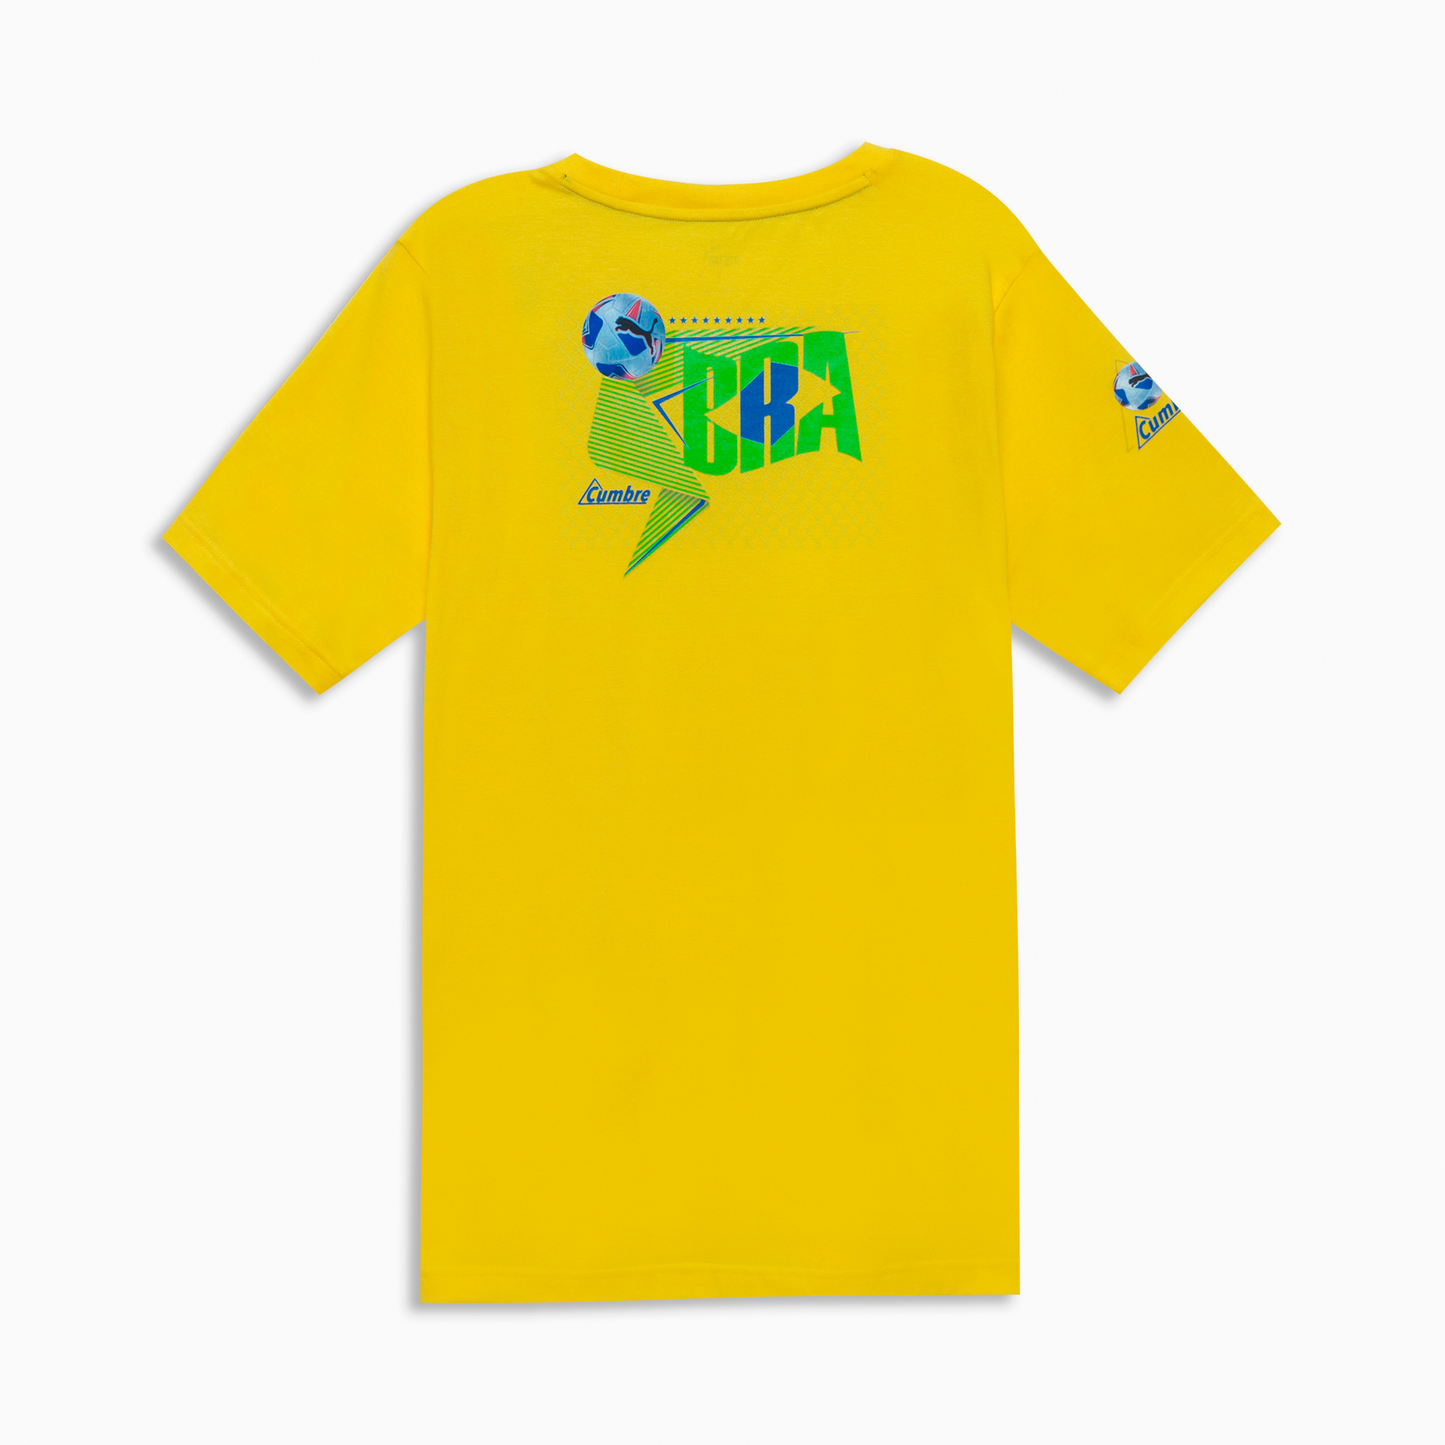 COPA America Brazil Yellow Puma T-Shirt